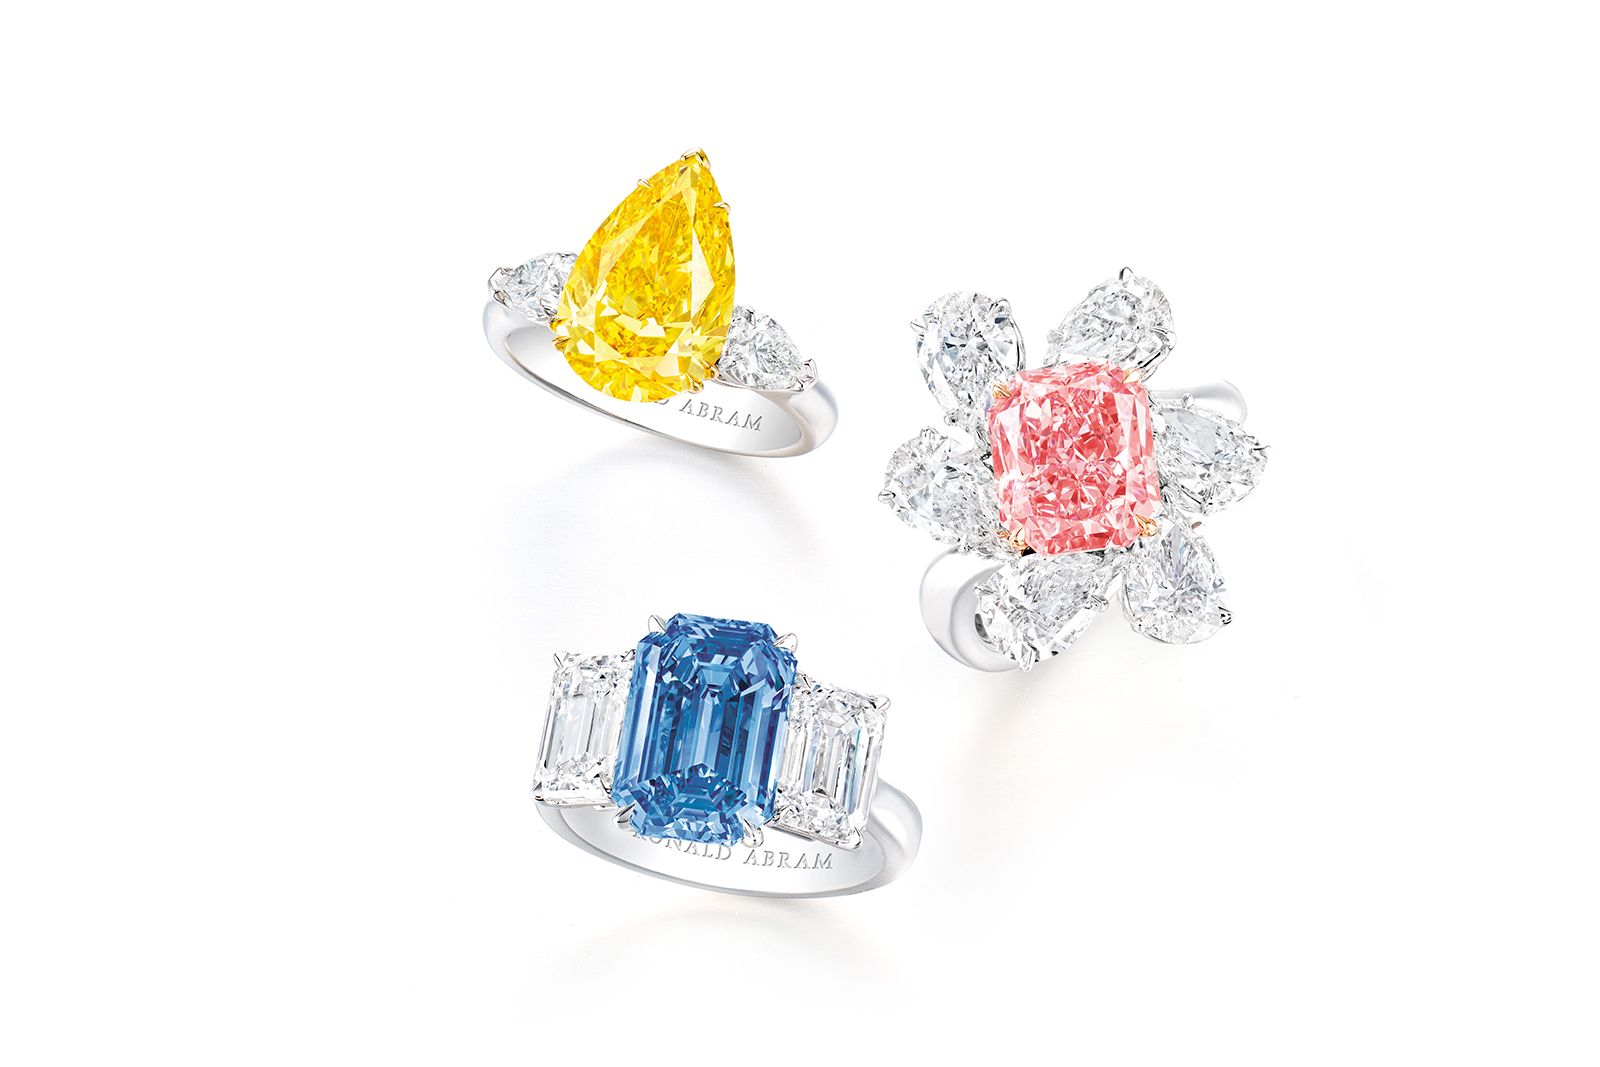 Ronald Abram fancy vivid coloured diamond rings